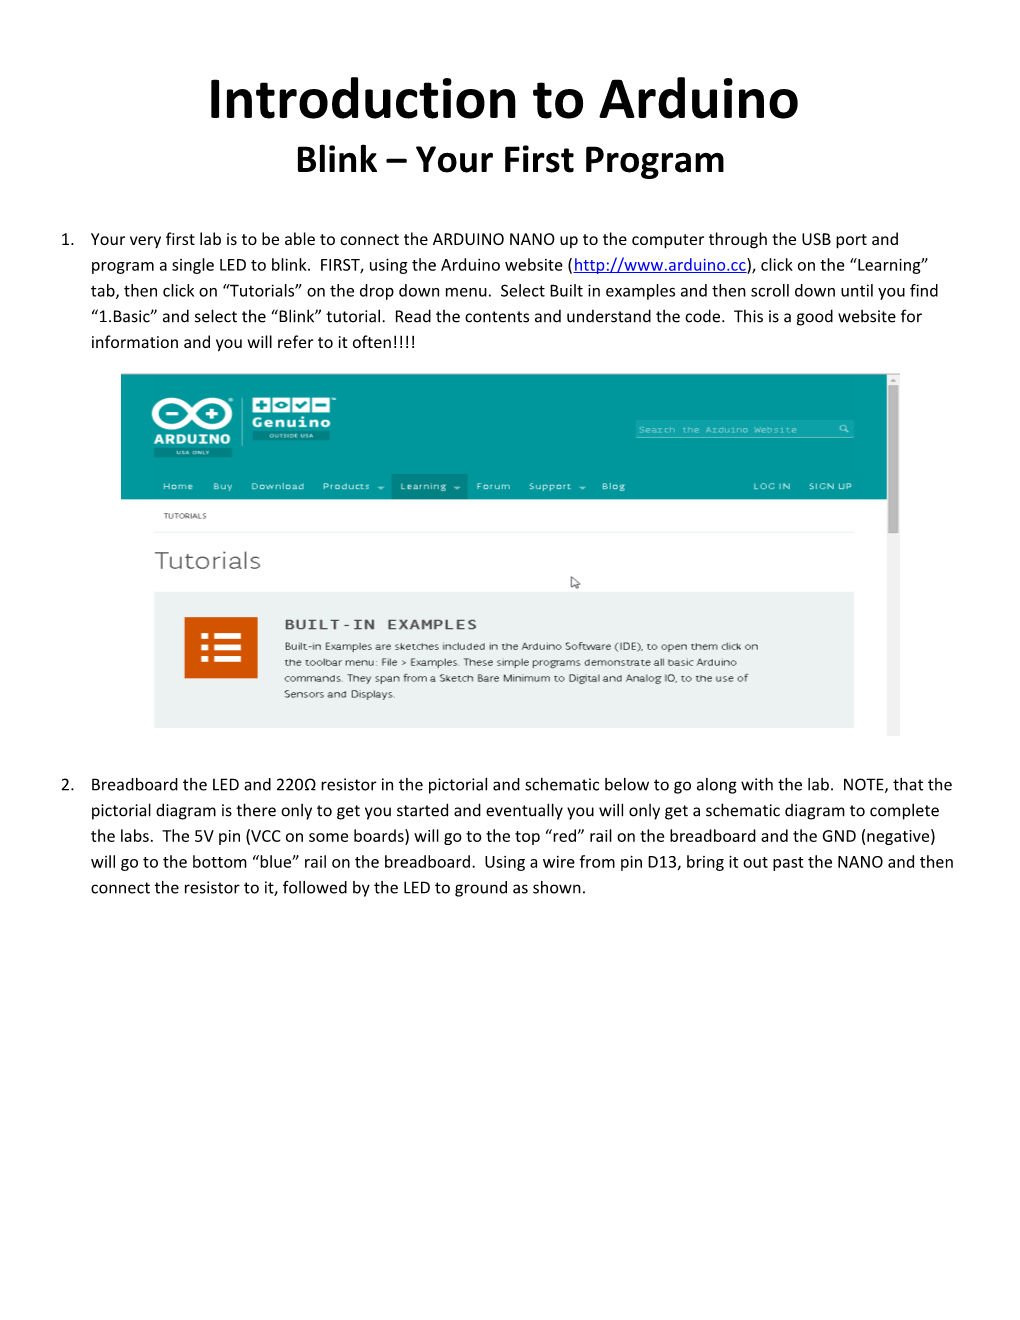 Blink Your First Program